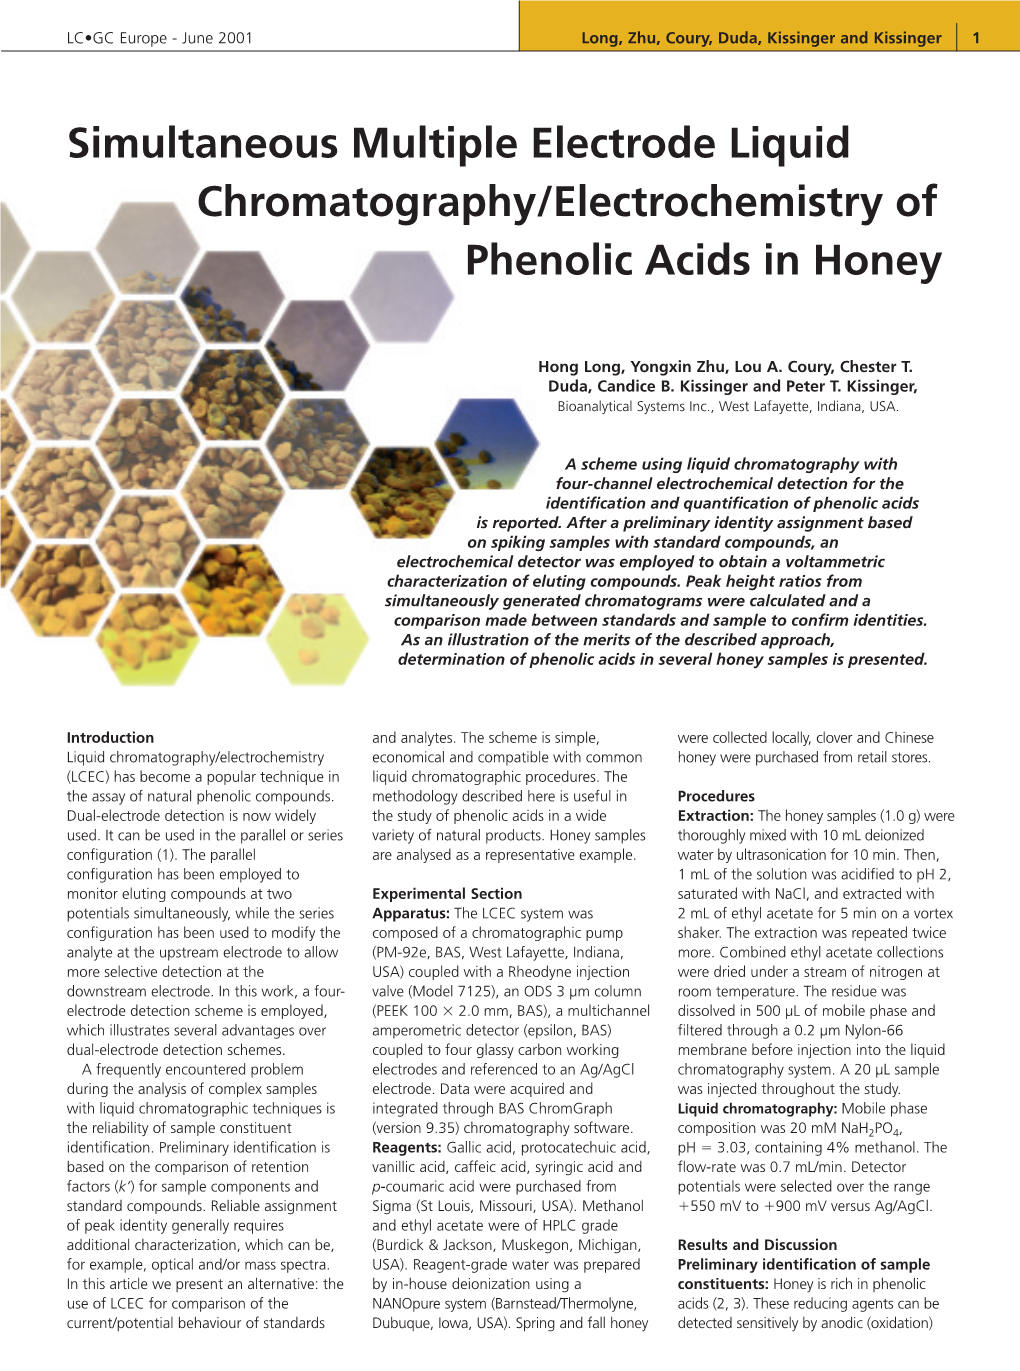 Simultaneous Multiple Electrode Liquid Chromatography/Electrochemistry of Phenolic Acids in Honey